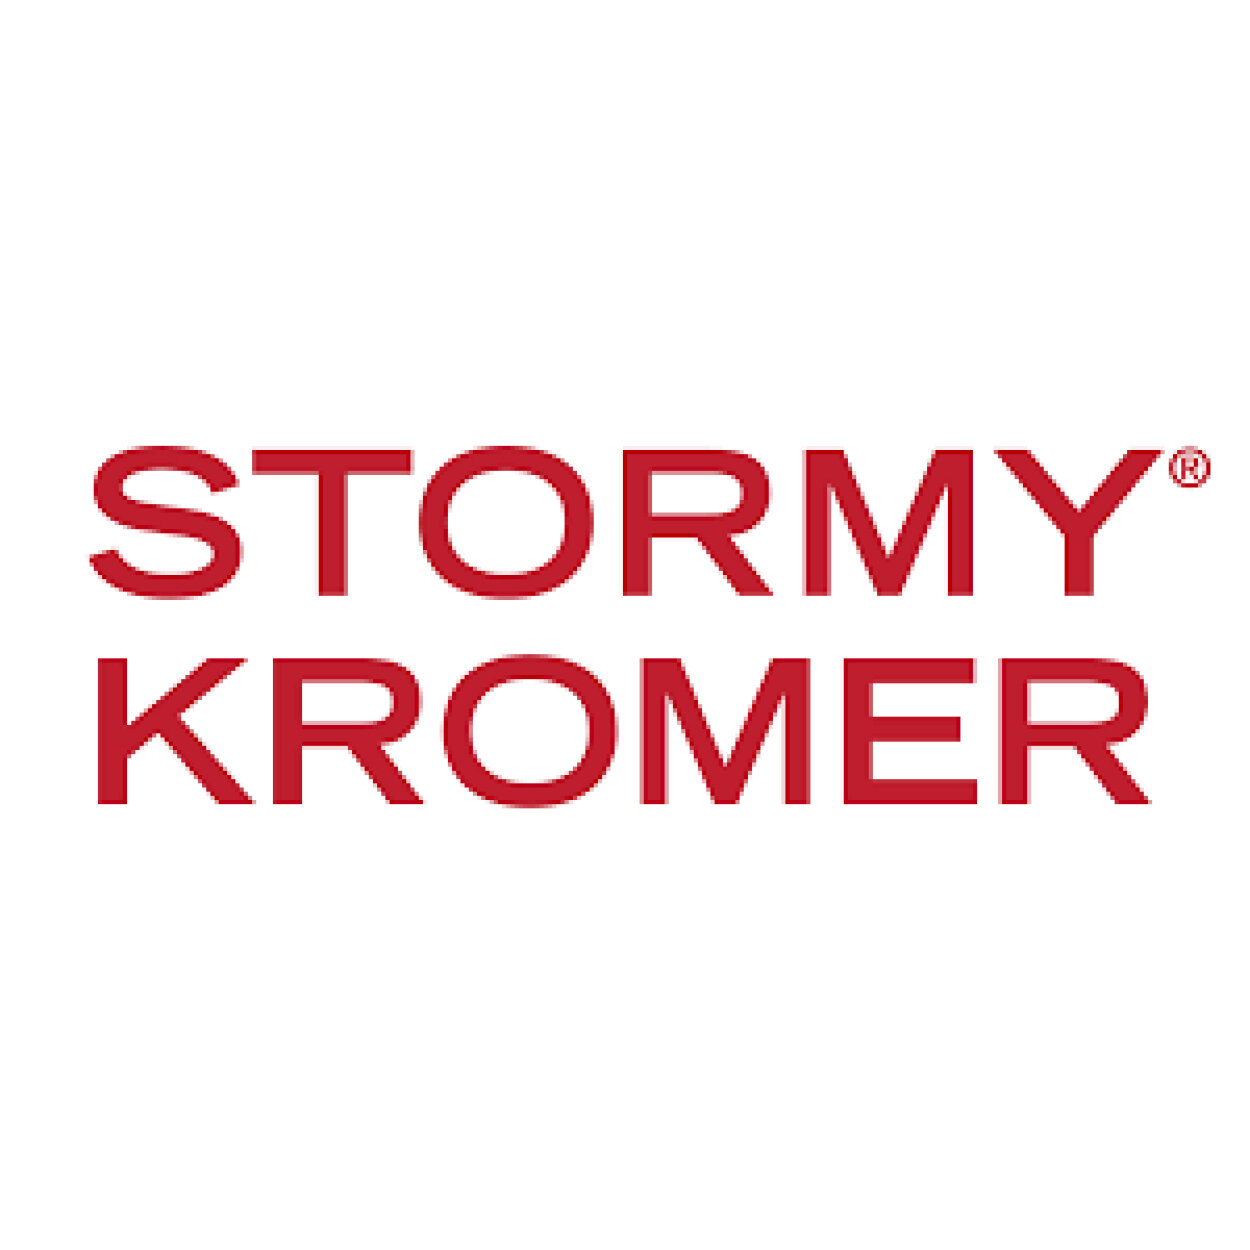 Stormy Kromer.jpg